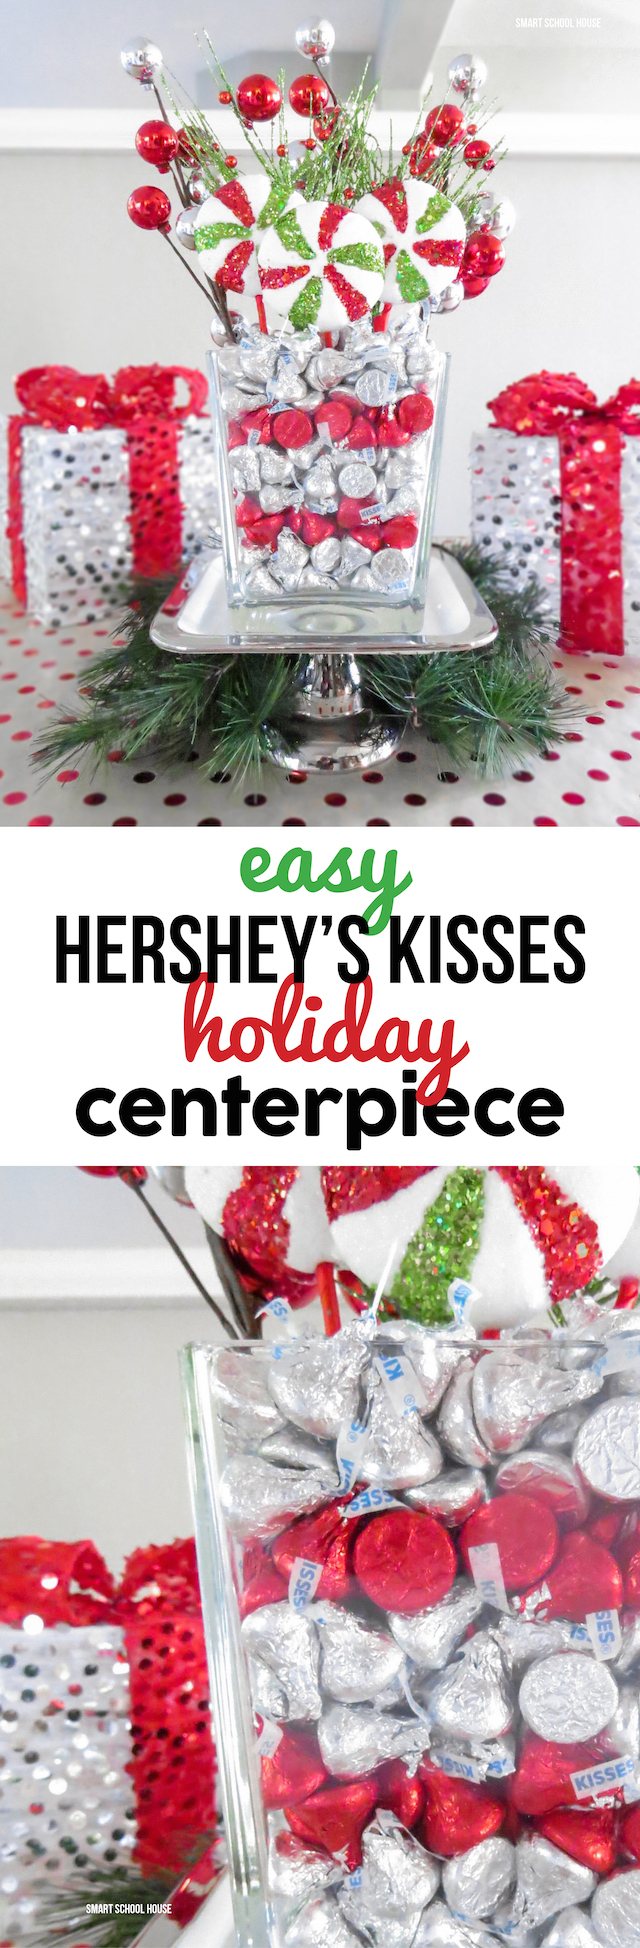 Hersheys kisses holiday centerpiece